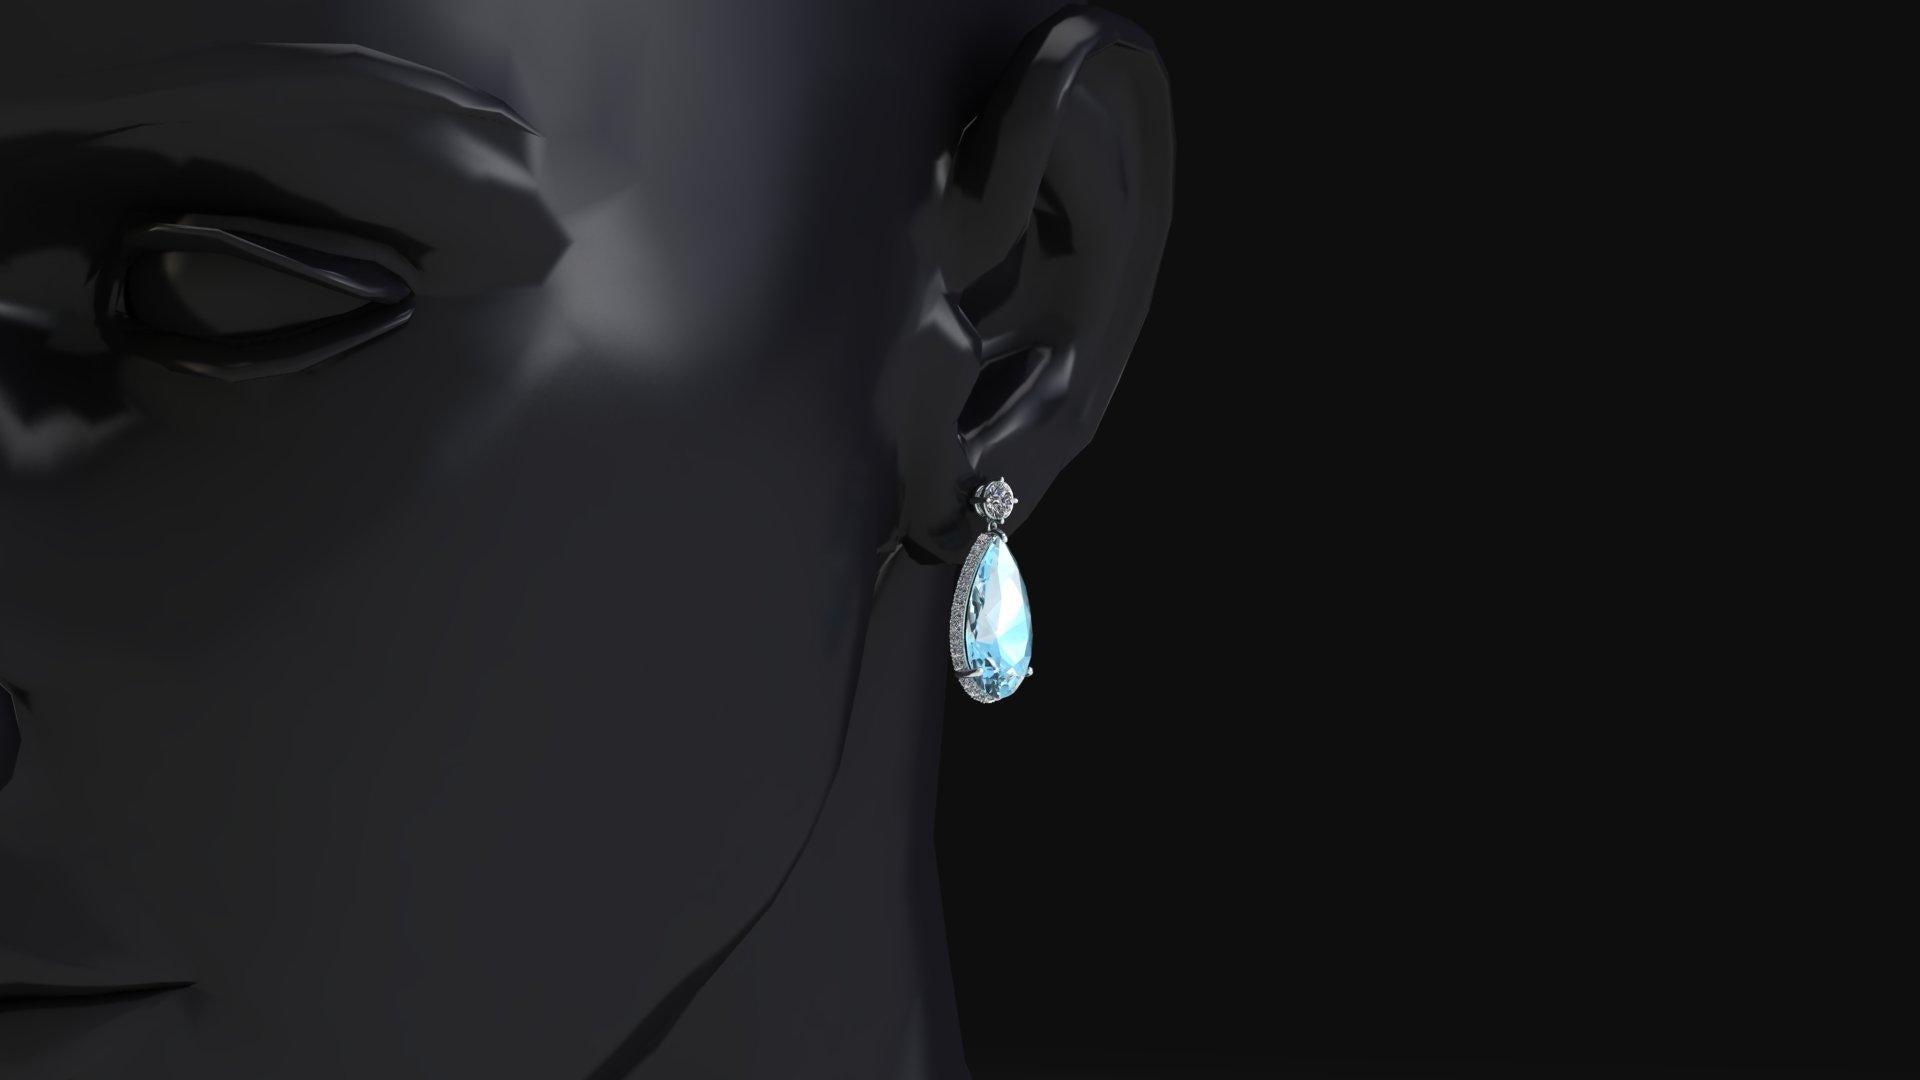 pear shaped aquamarine earrings